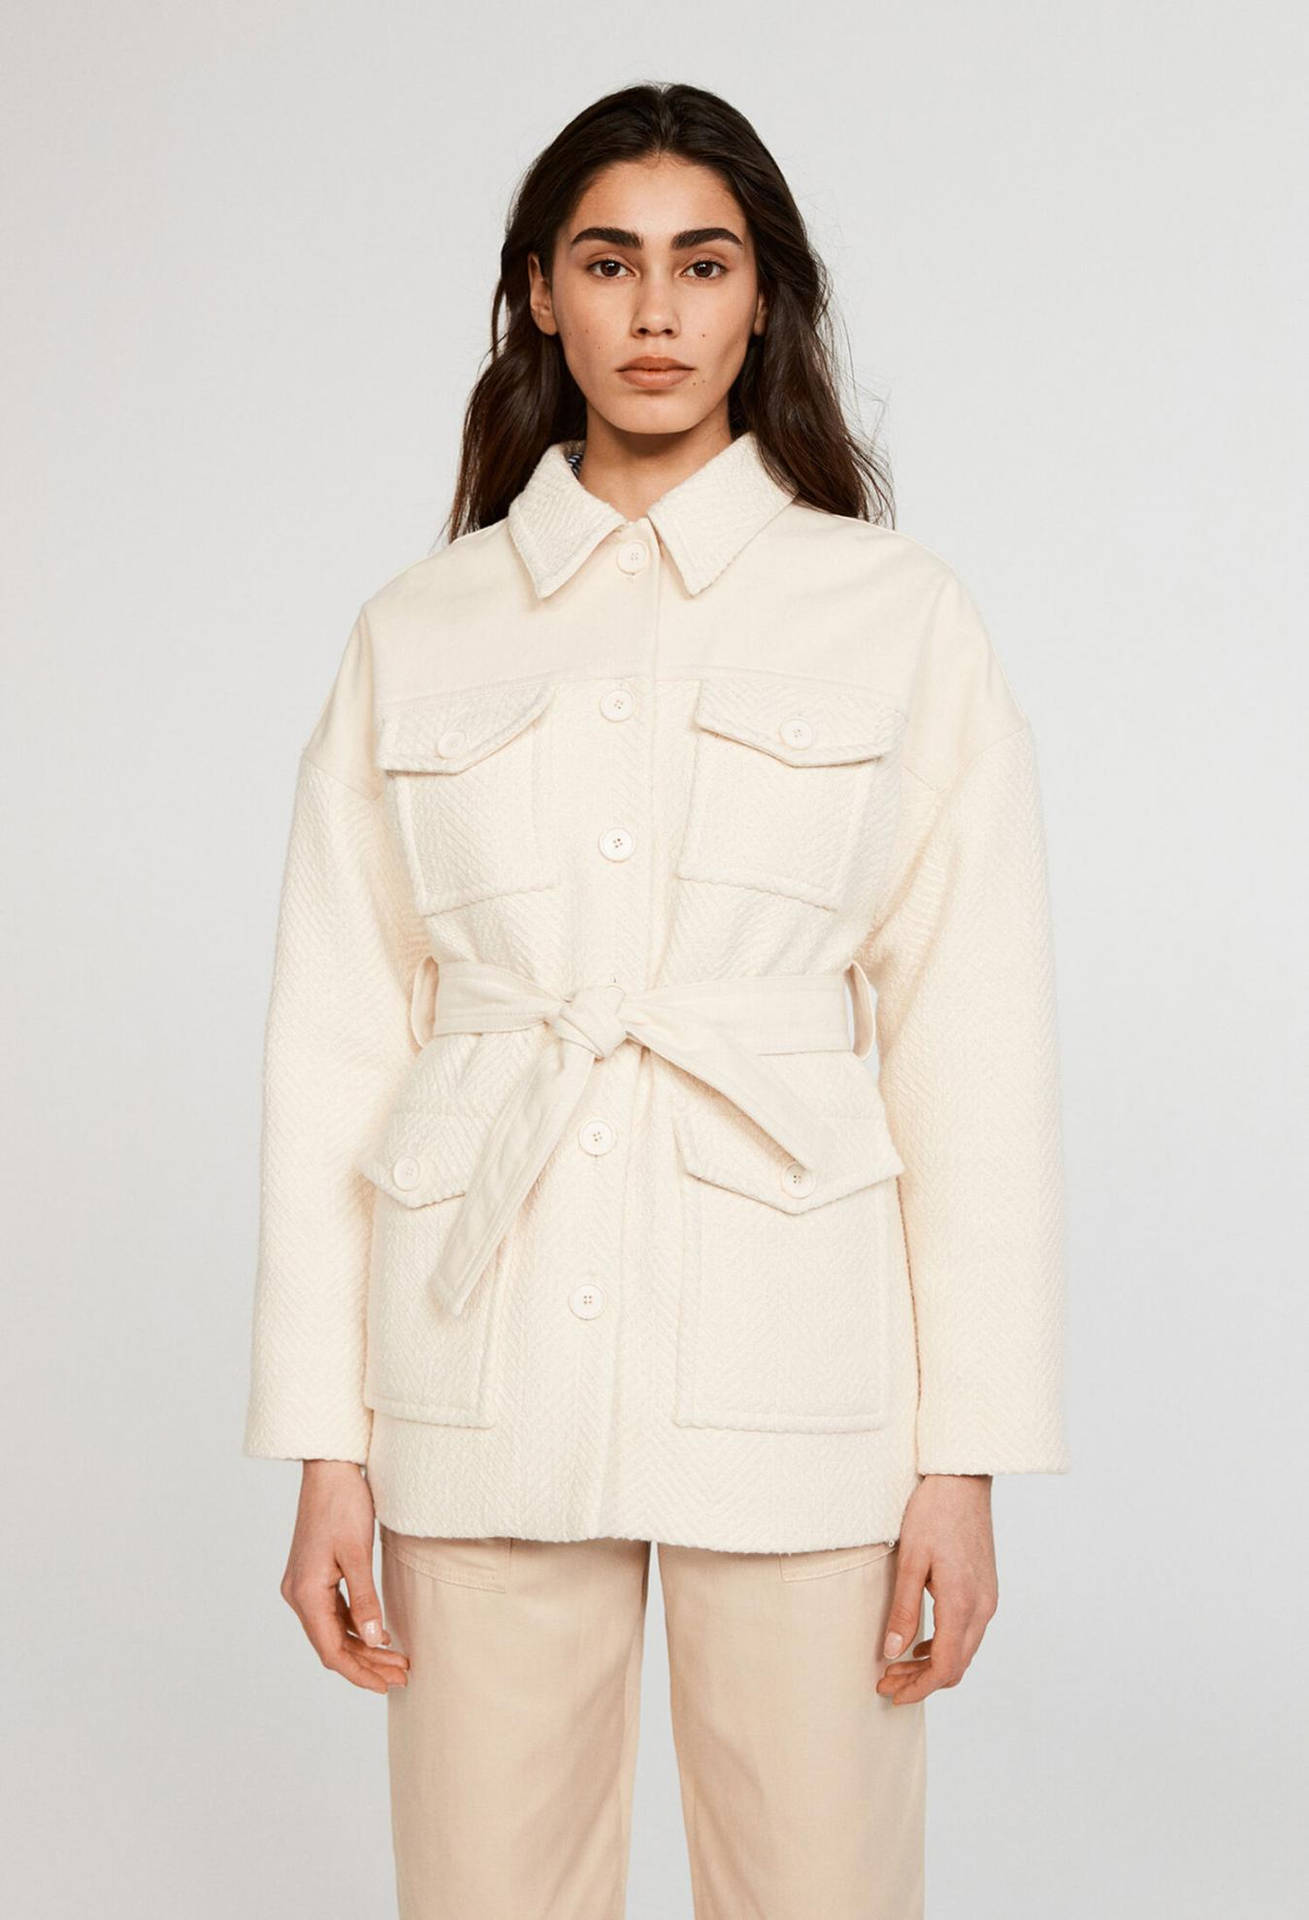 Claudie Pierlot White Coat With Belt Wallpaper